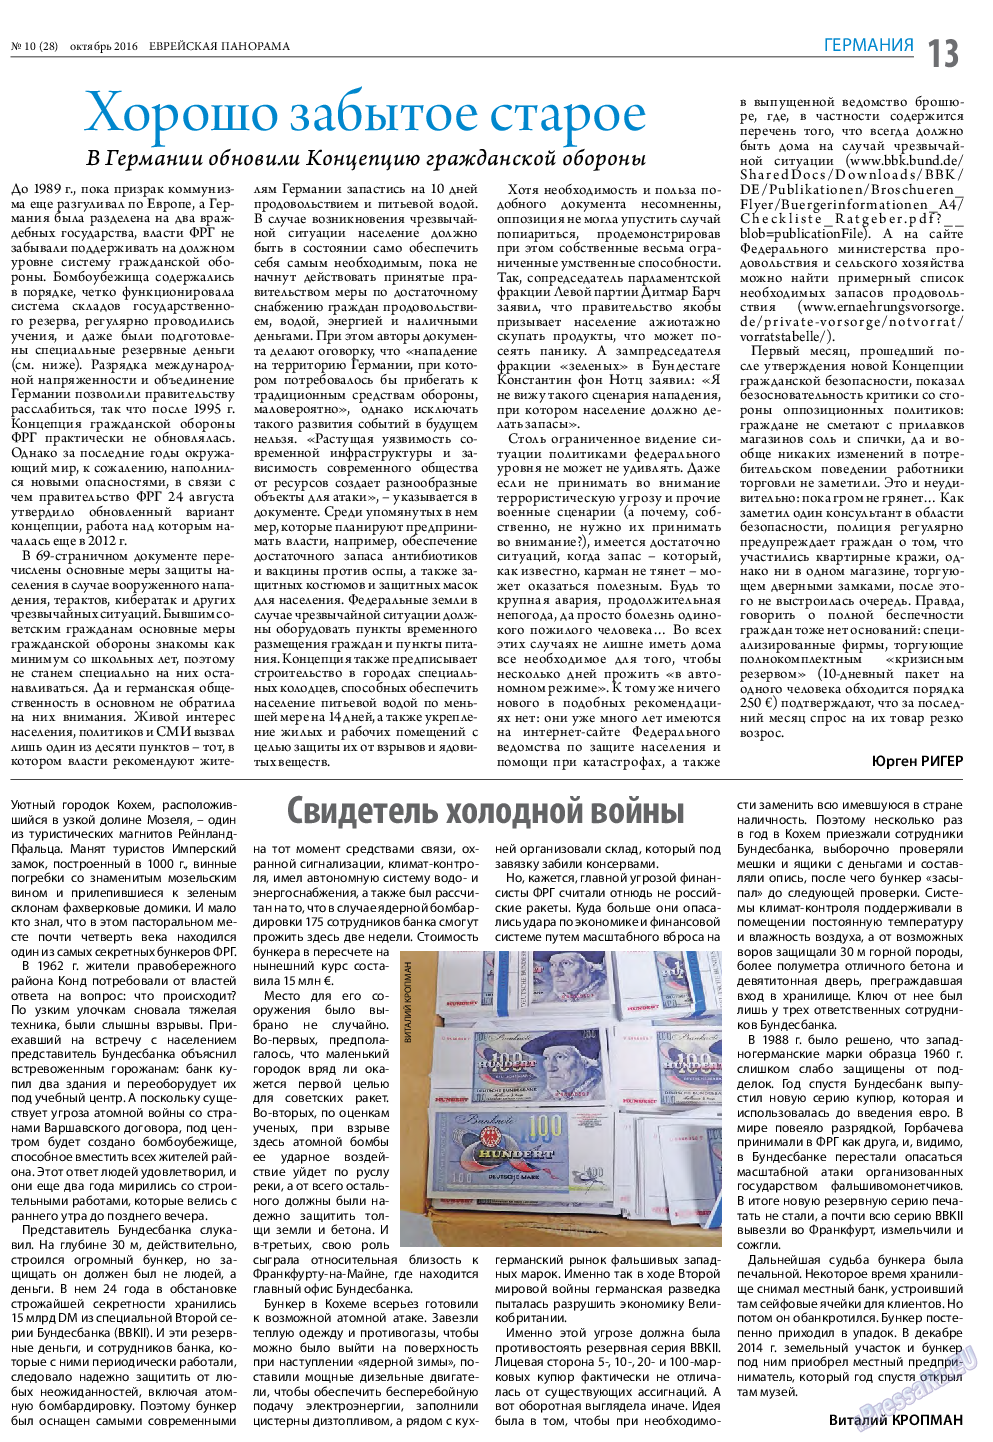 Еврейская панорама, газета. 2016 №10 стр.13